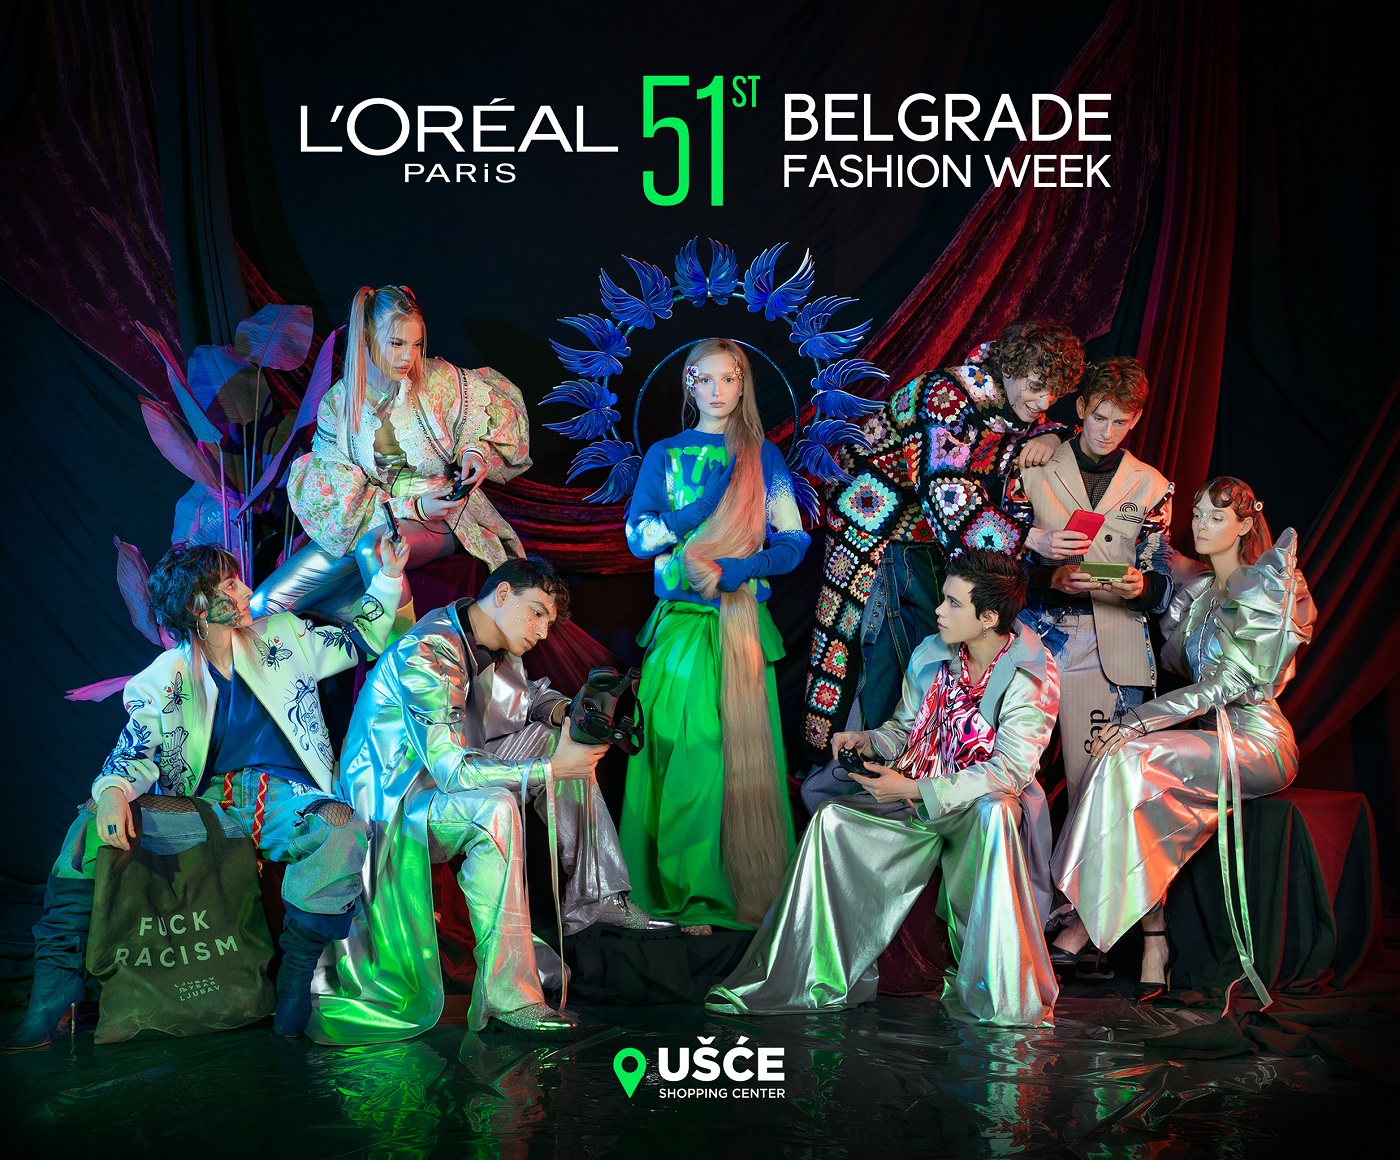 belgrade fashion week